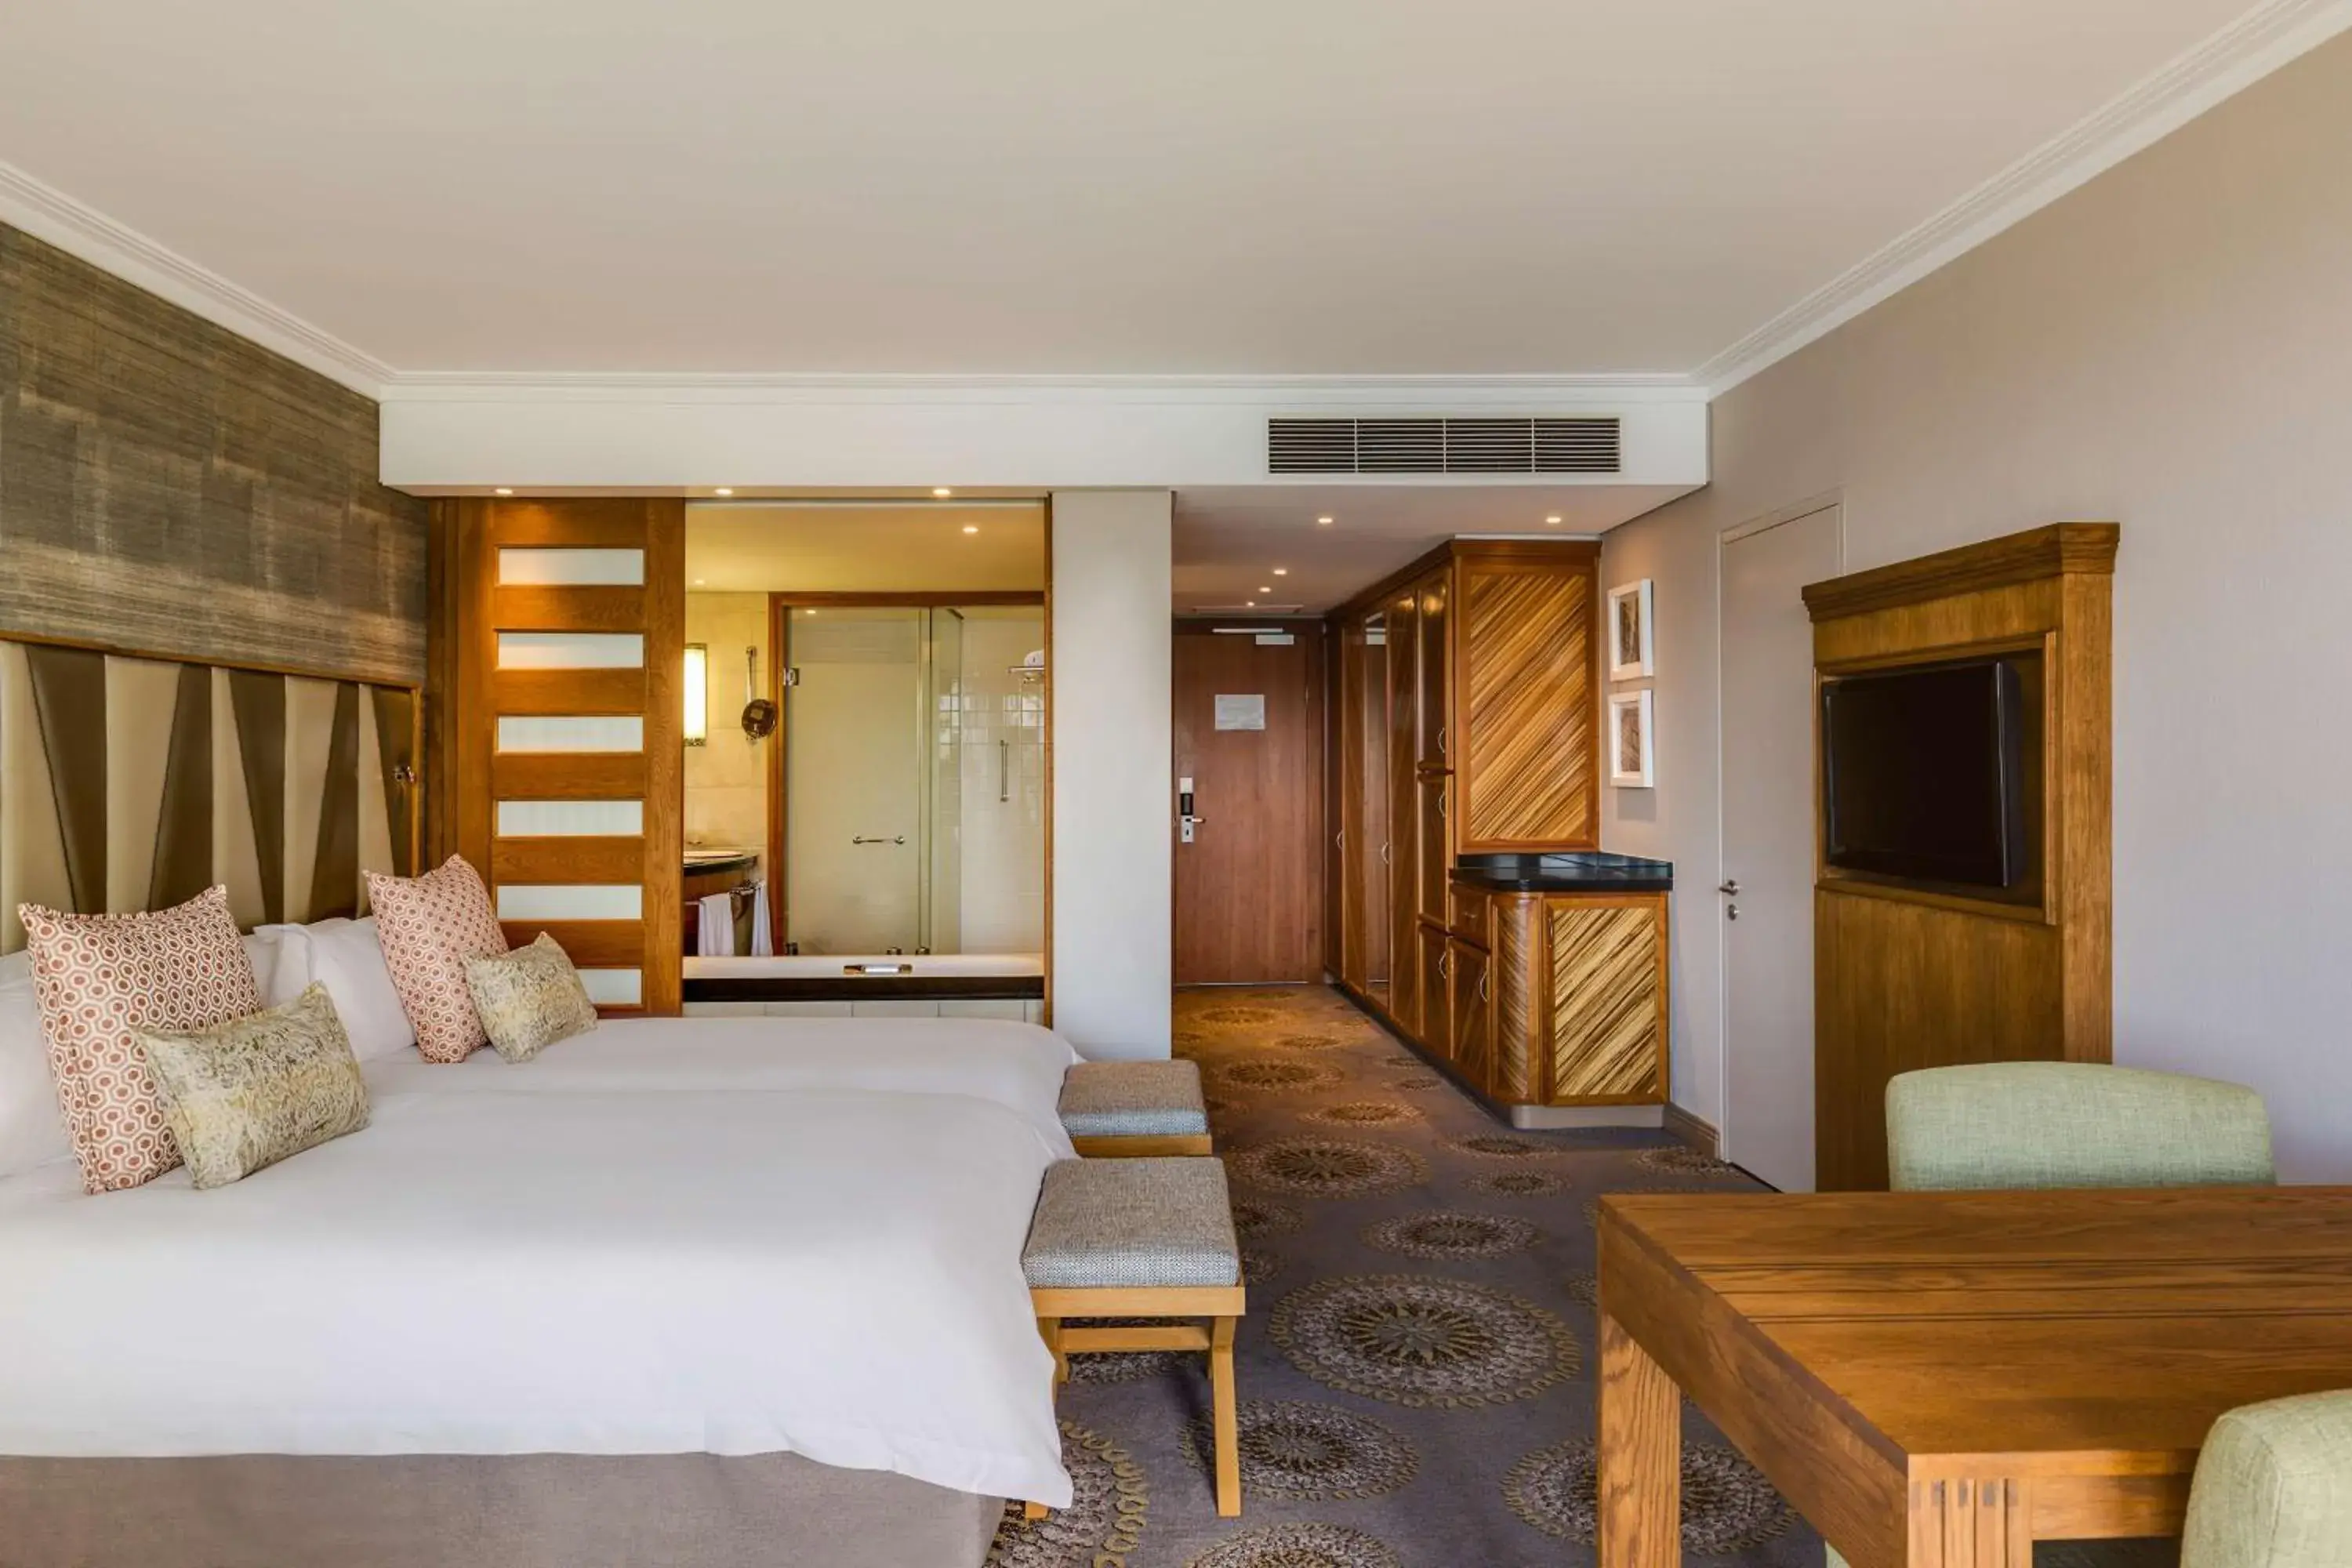 Bedroom in Arabella Hotel, Golf and Spa